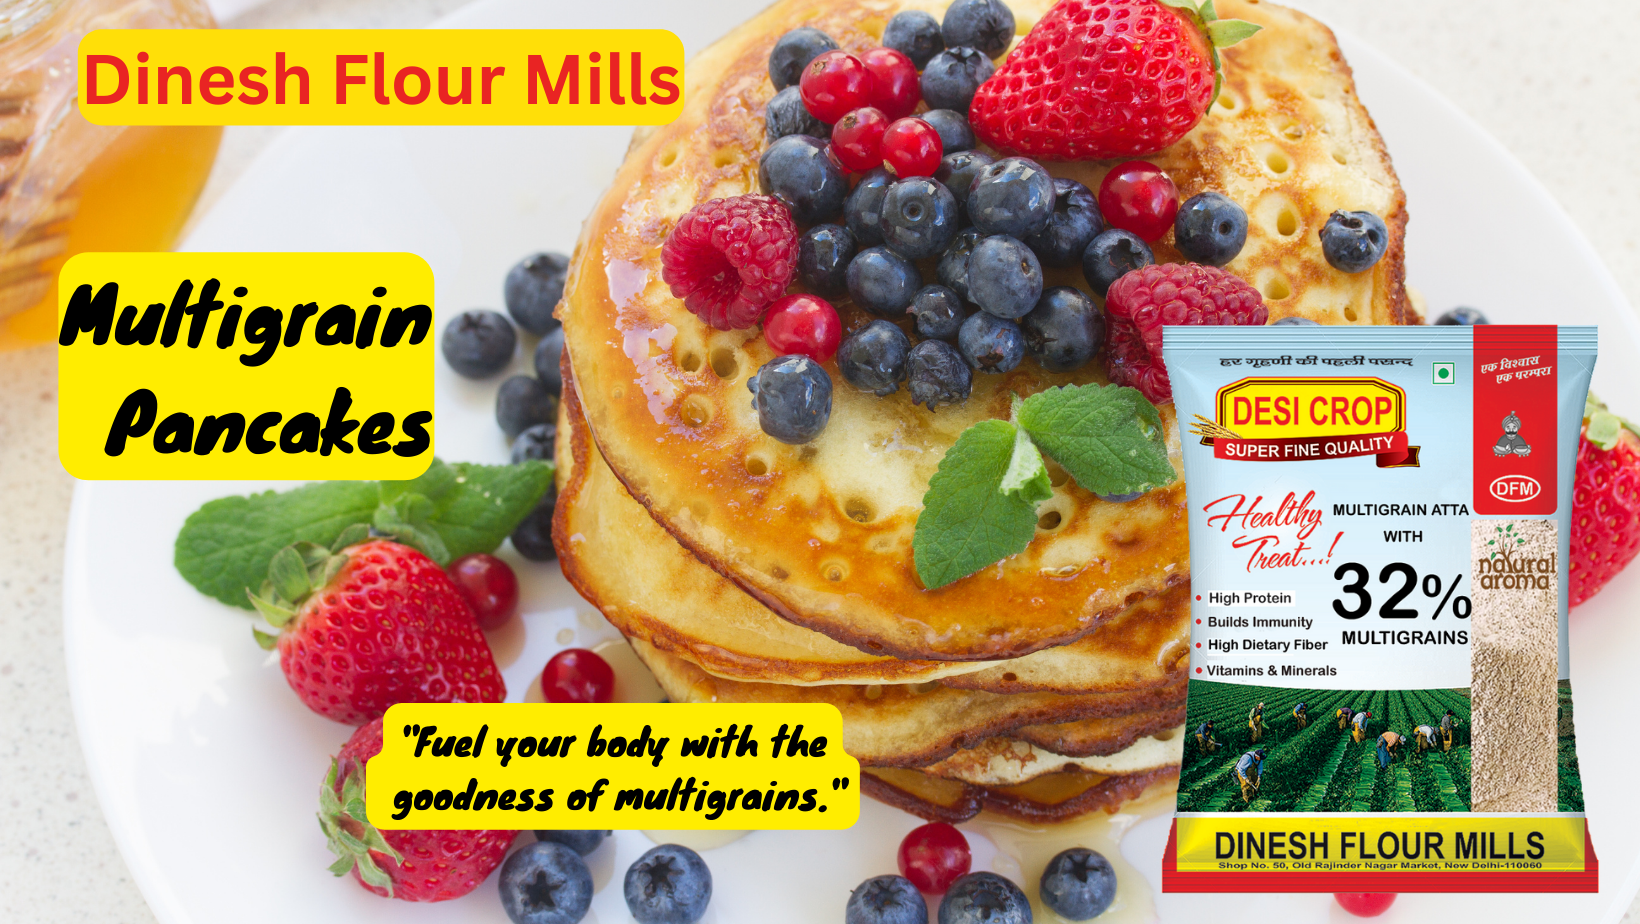 Multigrain Atta Pancakes